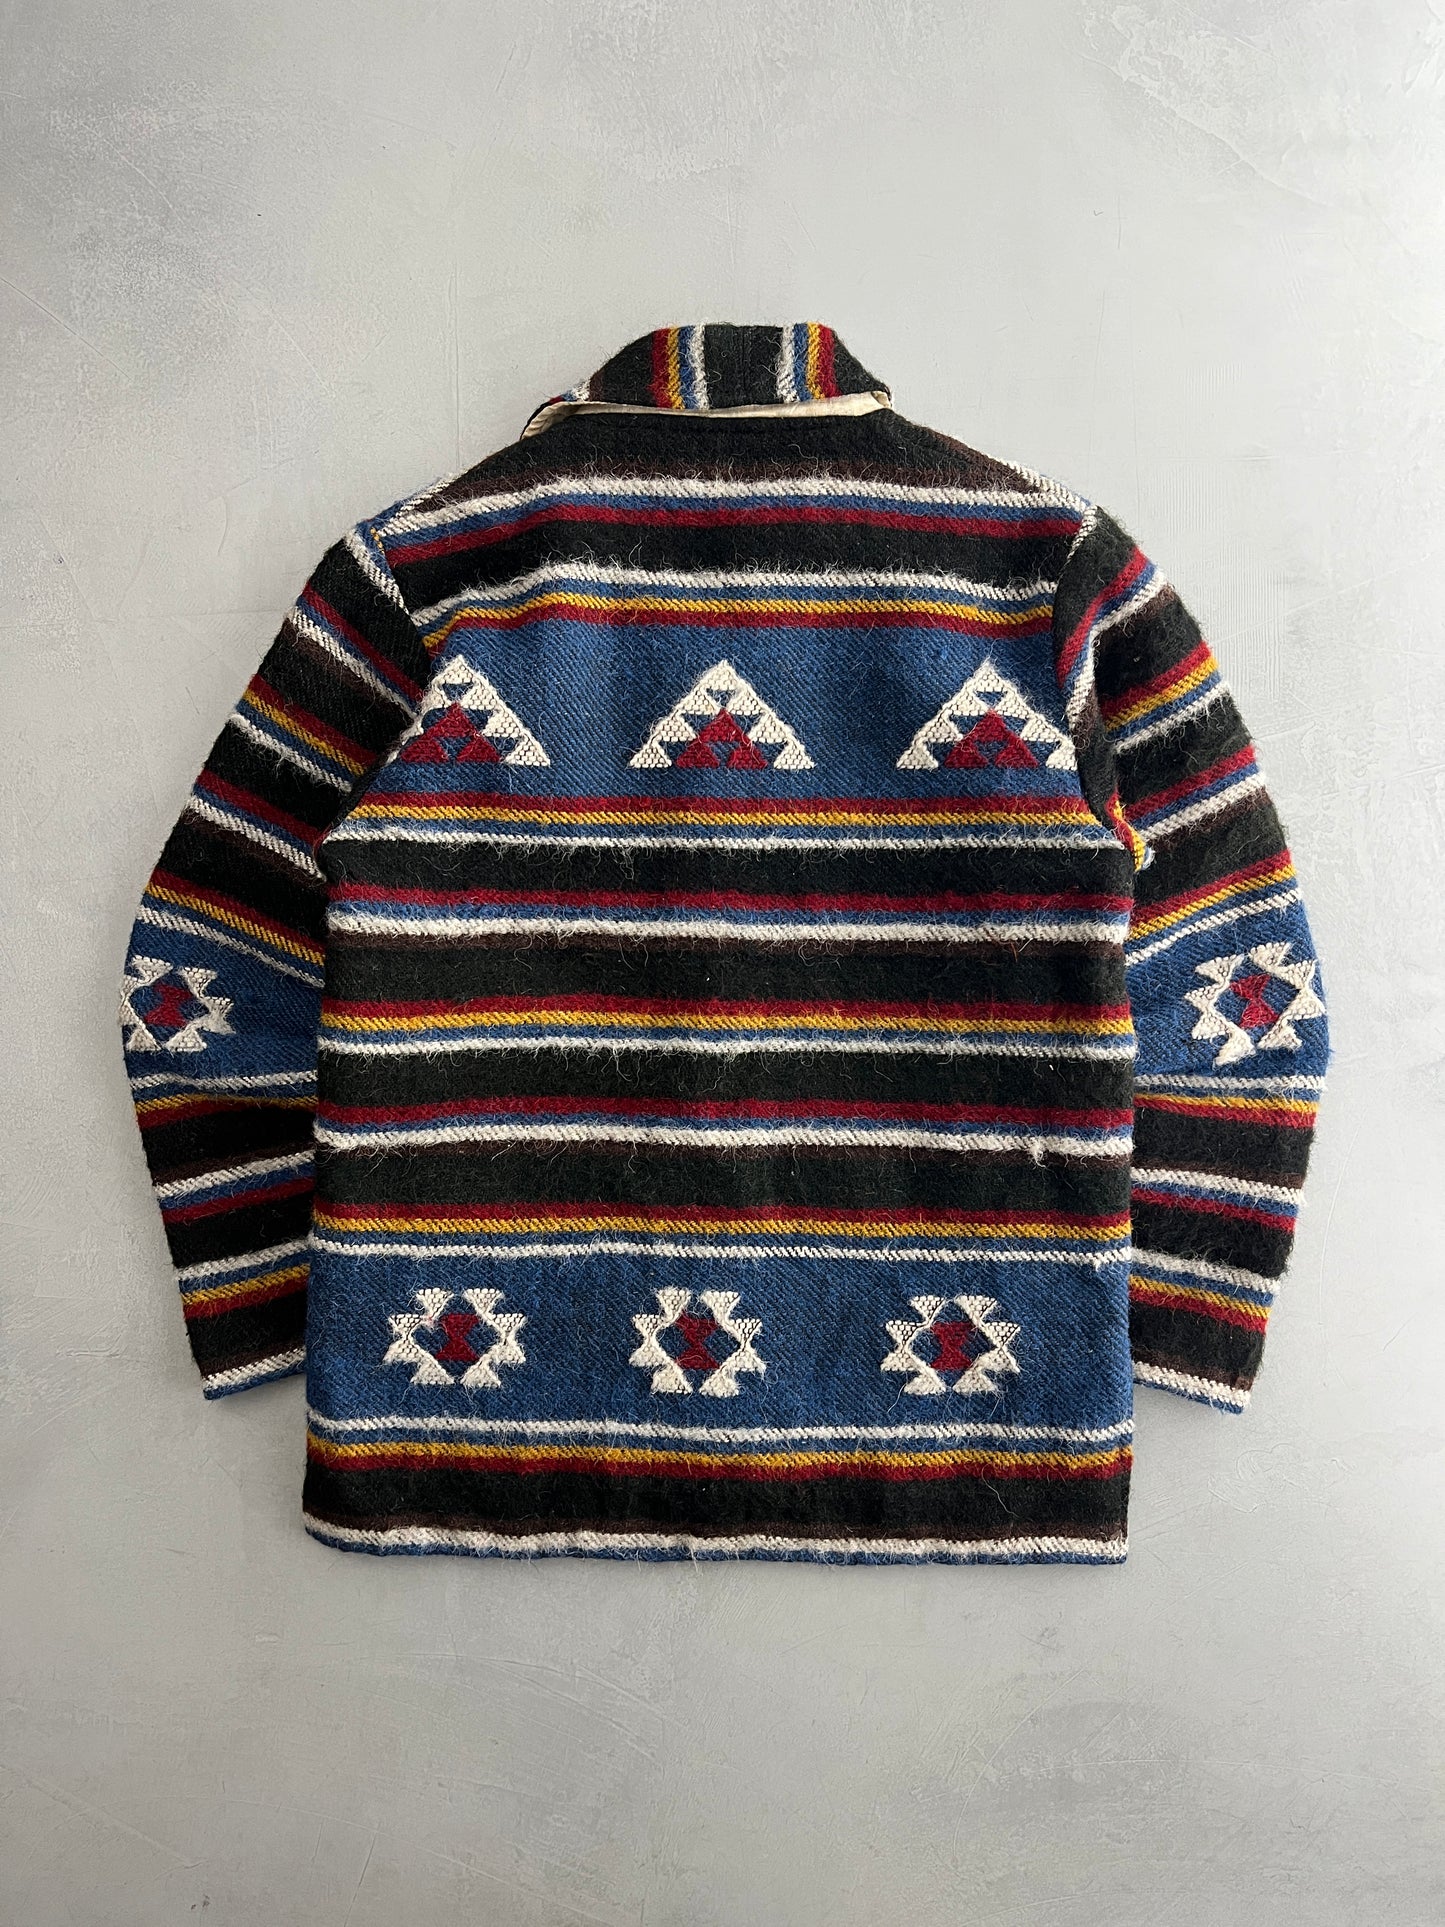 Handmade Wool Aztec Jacket [M]